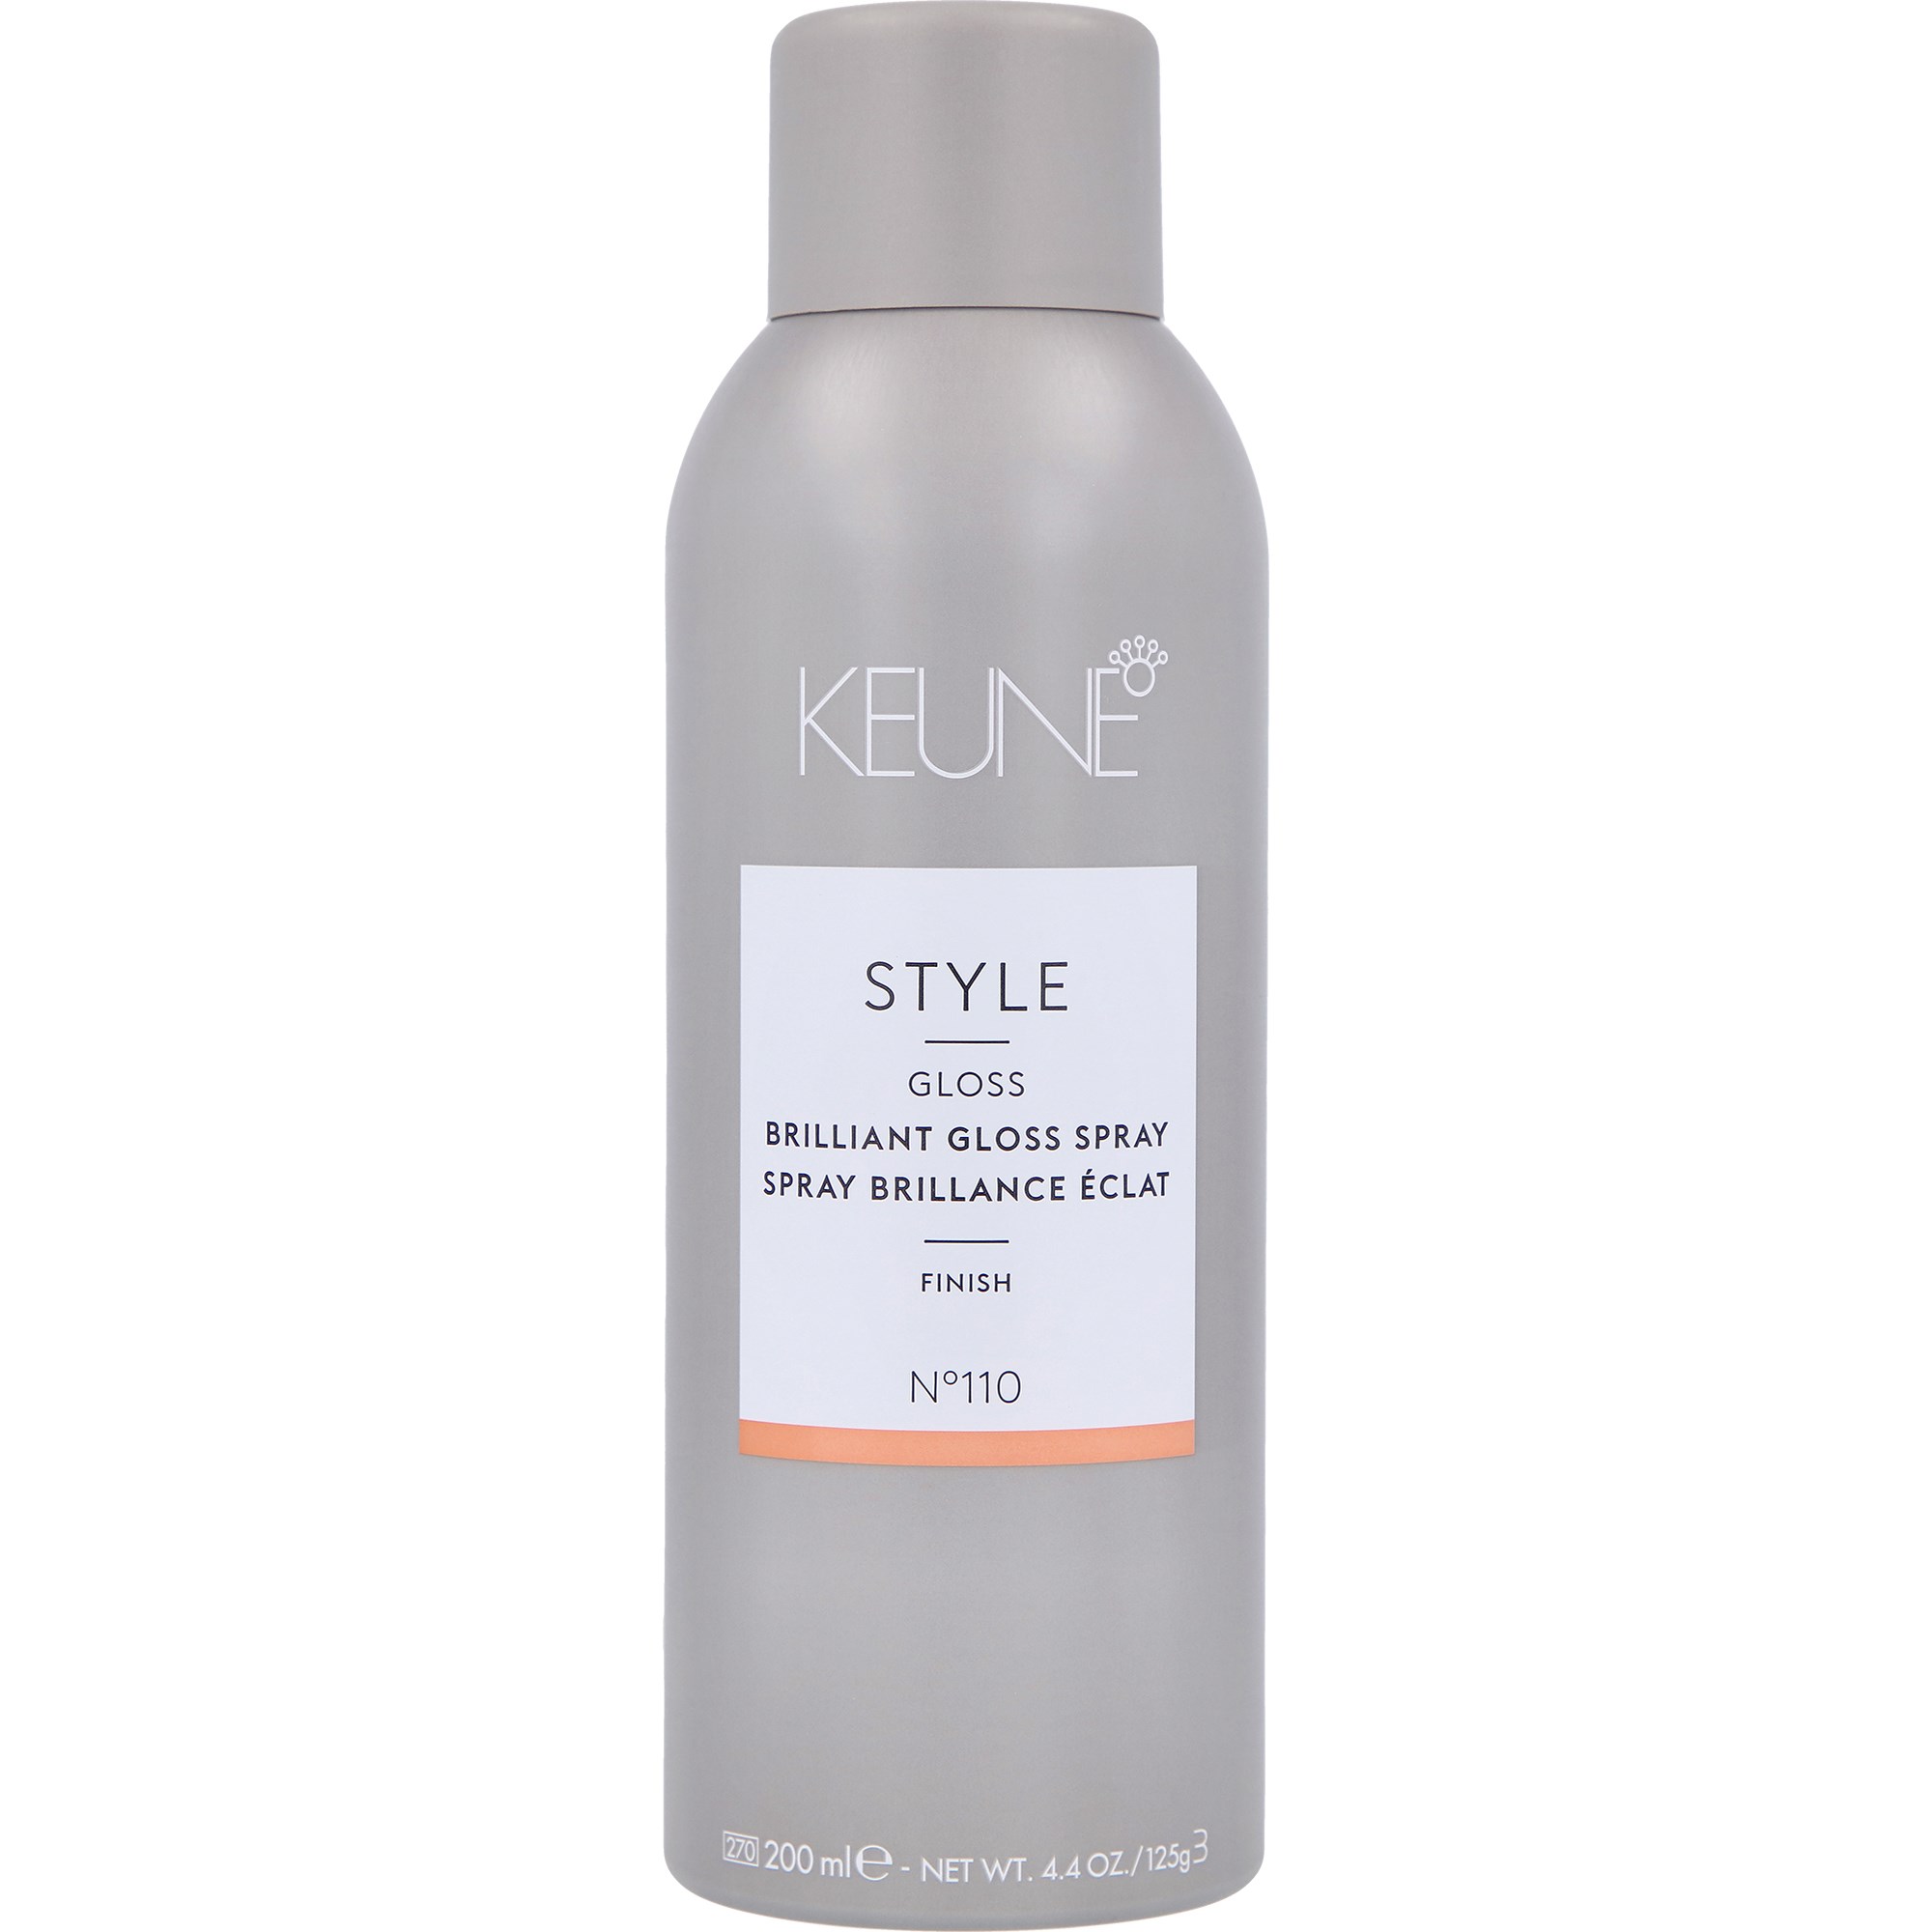 Keune Style Brilliant Gloss Spray 200 ml